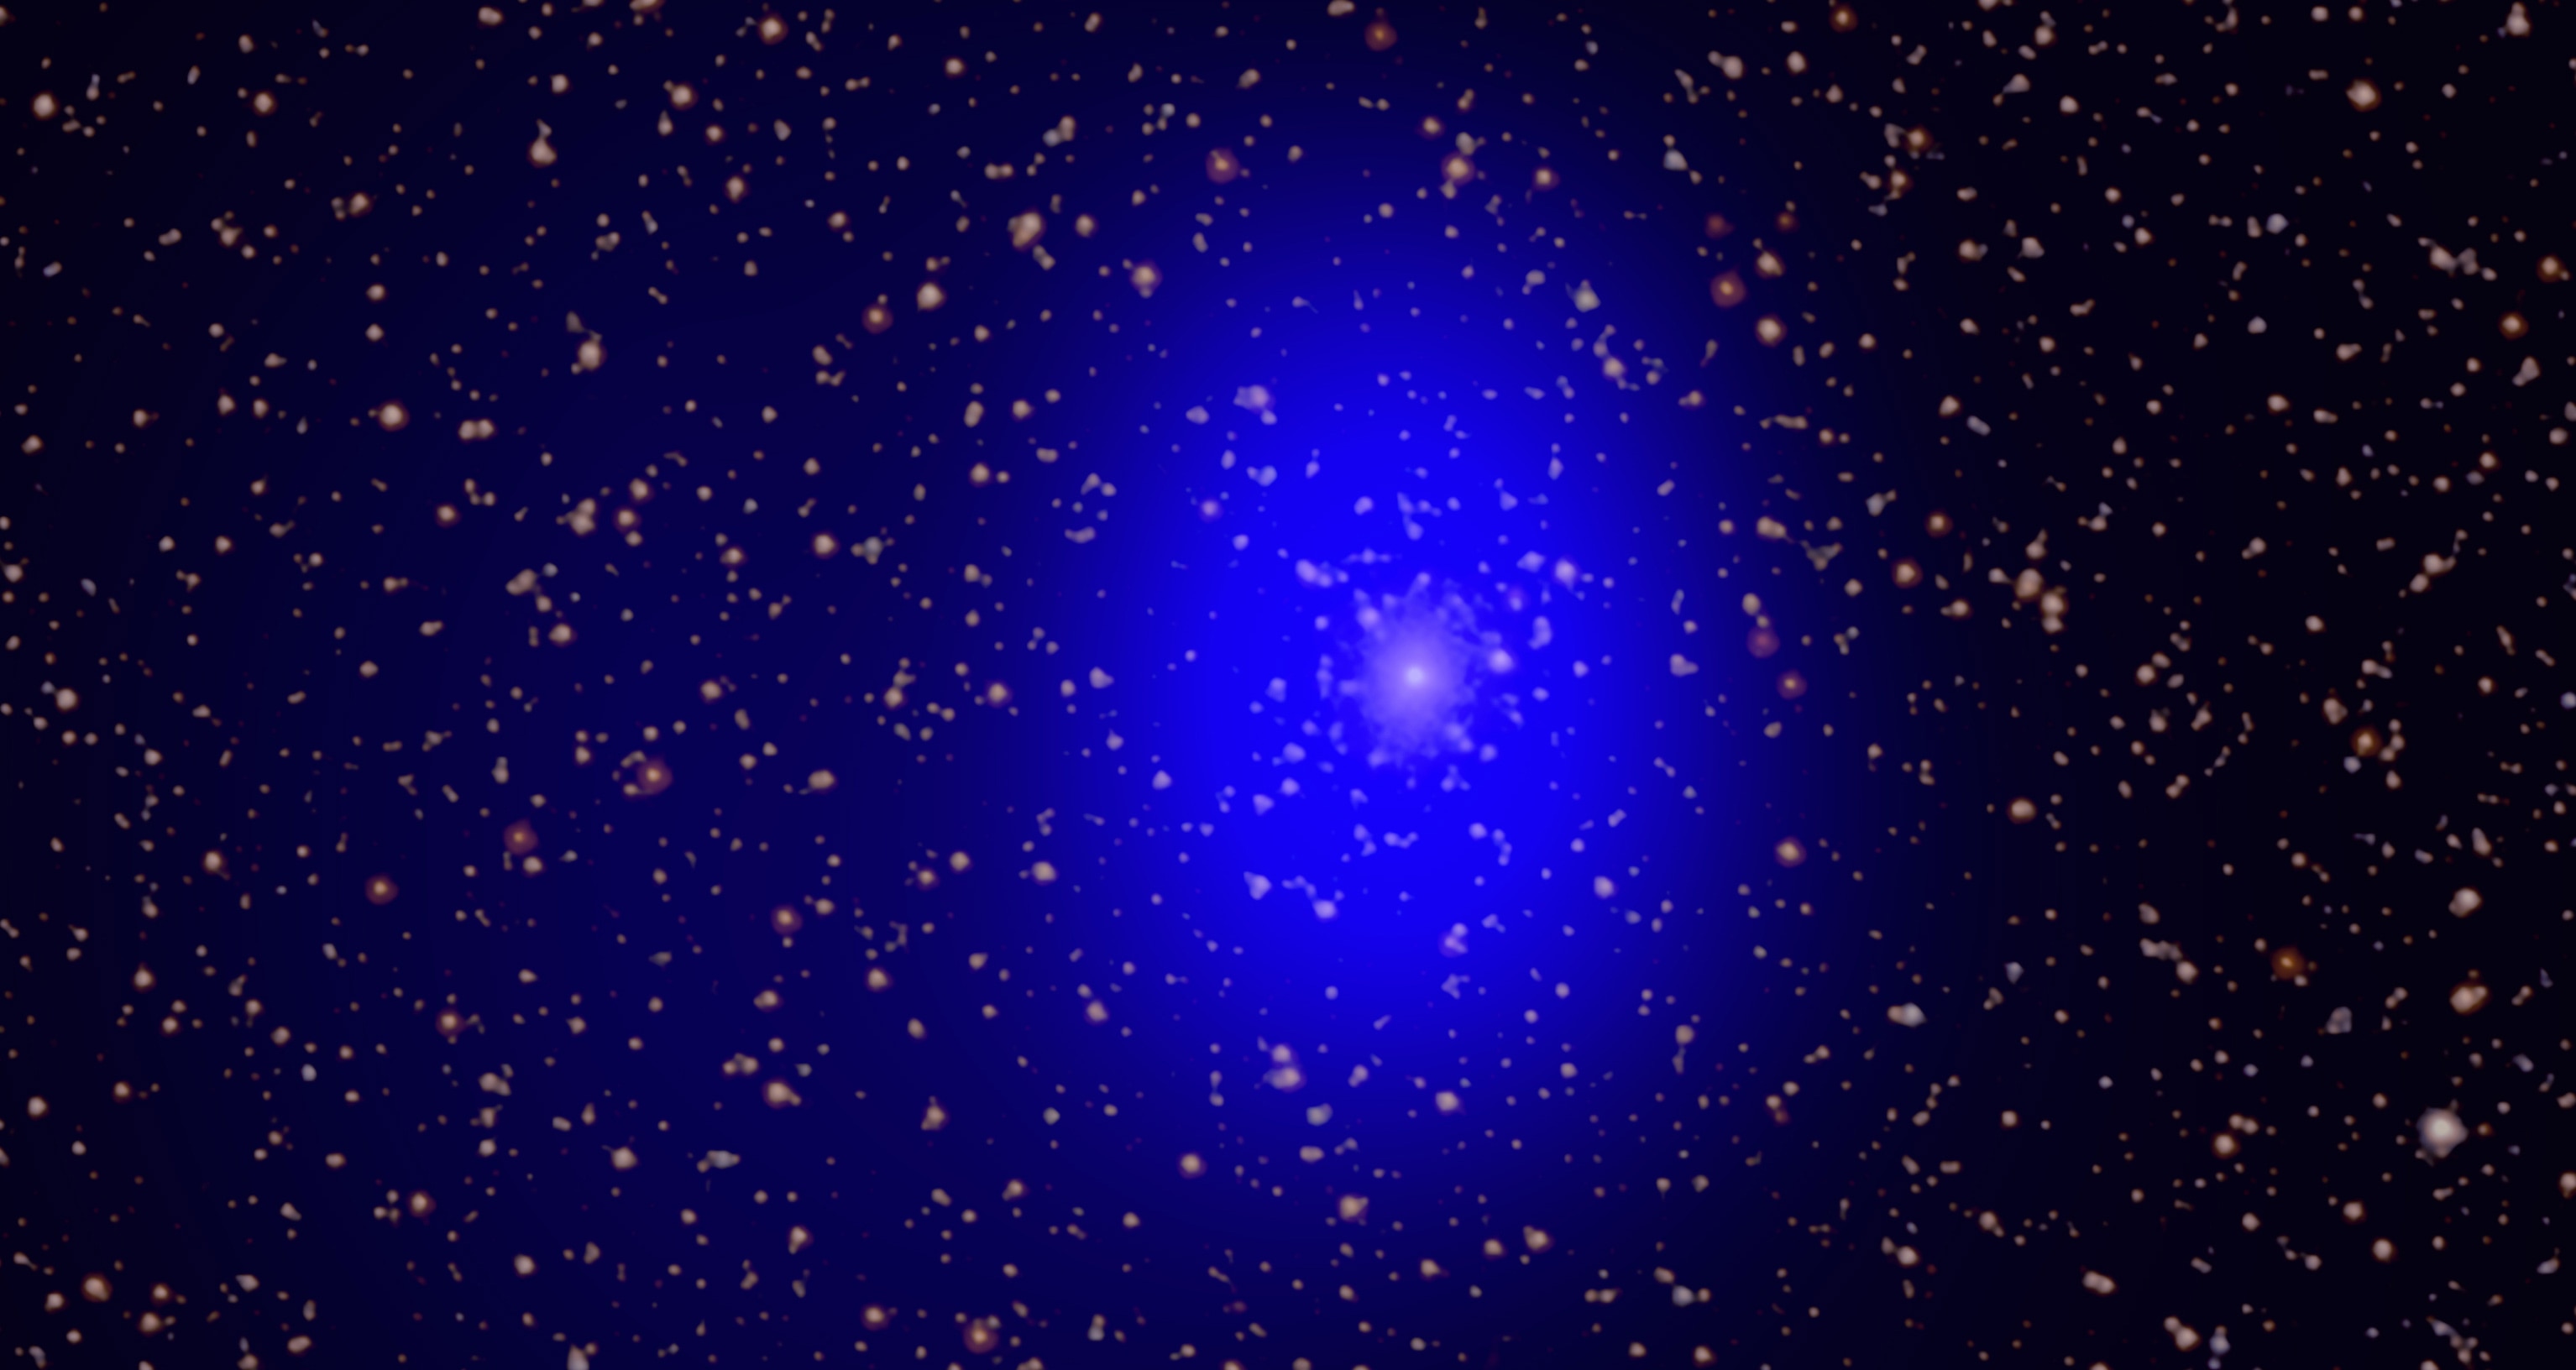 J0045 (seen in X-rays (blue) and optical light) in the outskirts of the Andromeda Galaxy. Credit: X-ray: NASA/CXC/Univ. of Washington/T.Dorn-Wallenstein et al.; Optical: NASA/ESA/J. Dalcanton, et al. & R. Gendler